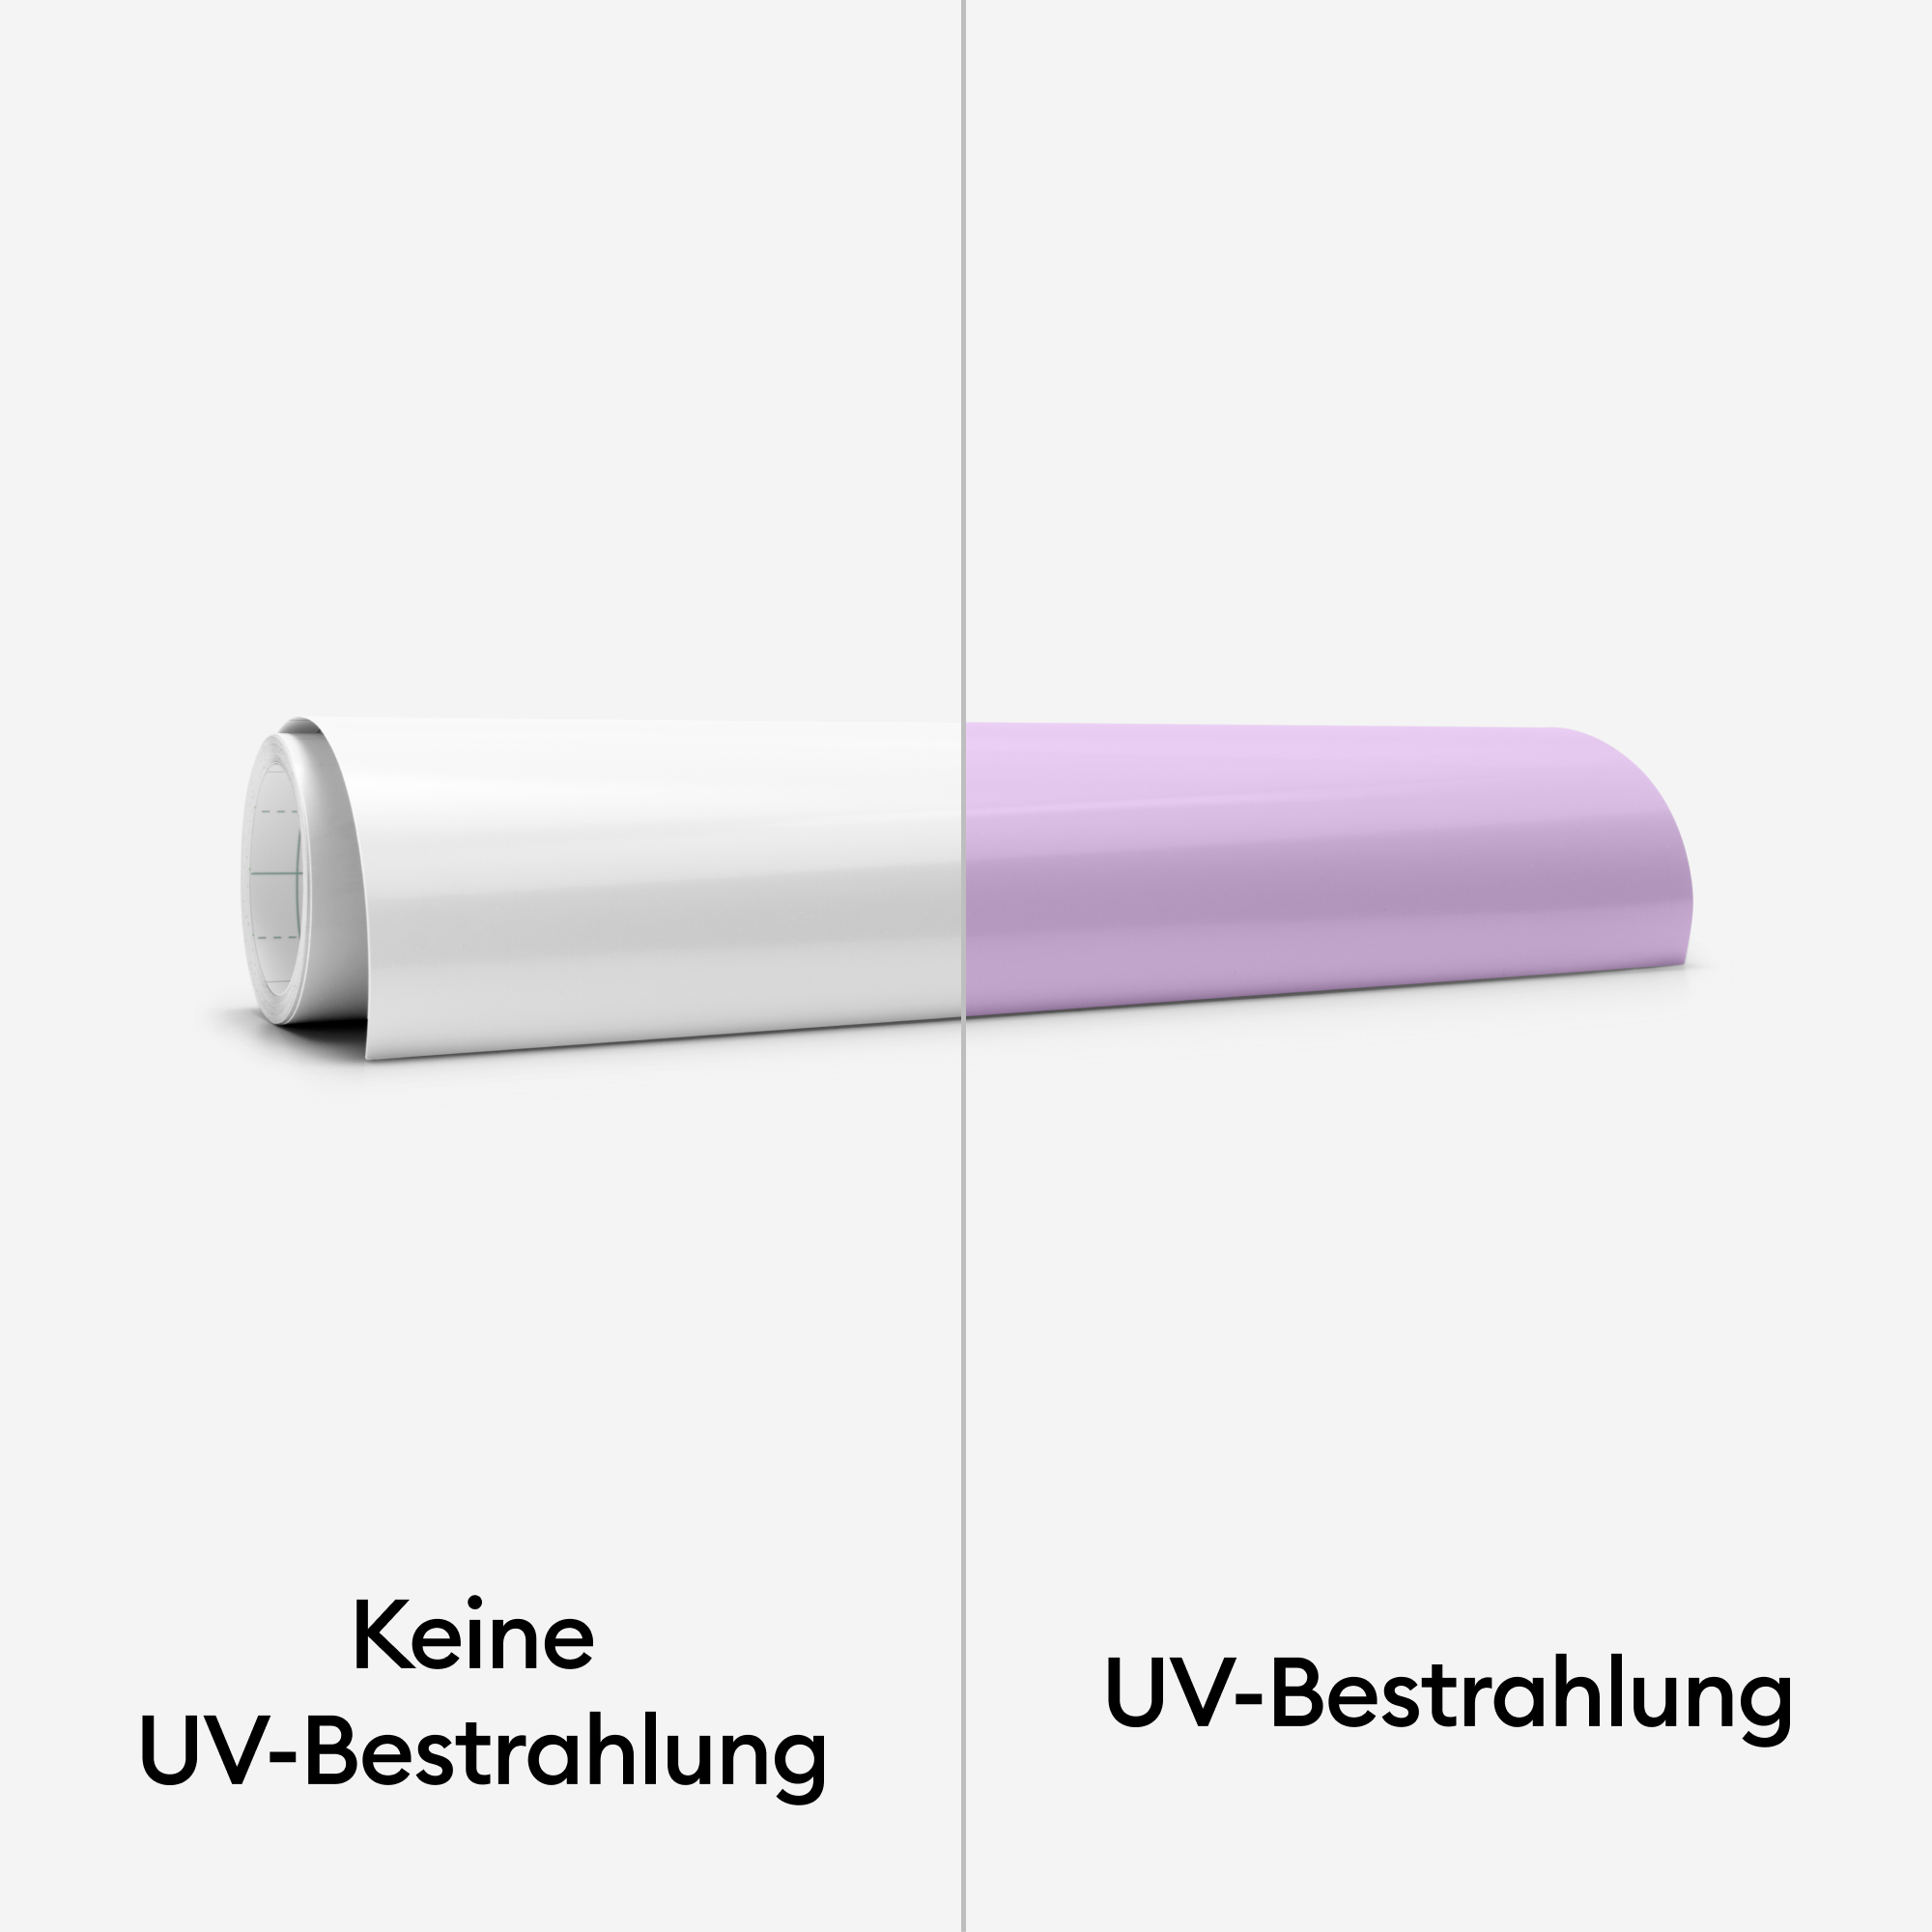 Iron-On UV-aktivierte Violet CRICUT Bügelfolie